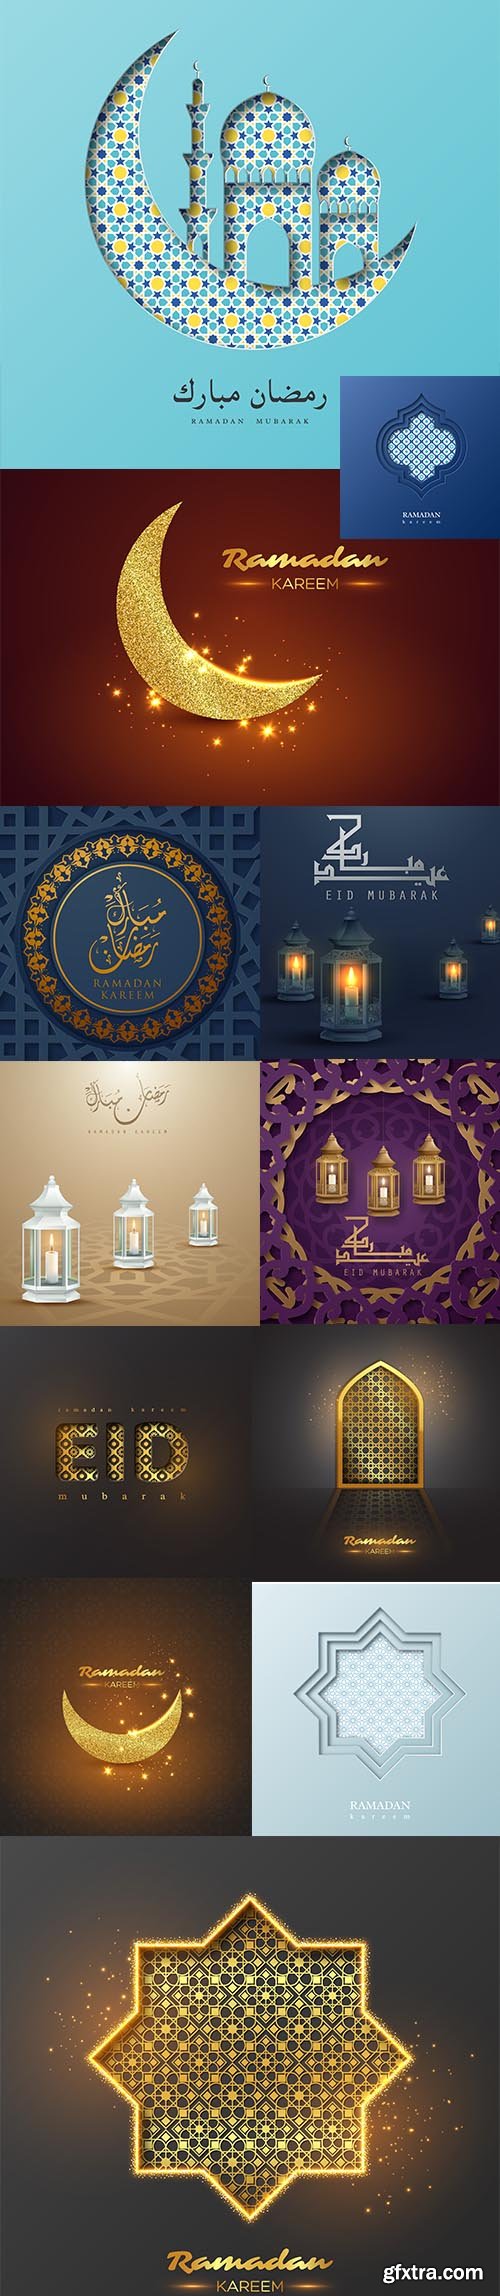 Vector Set of Realistic Beautiful Muslim Illustrations